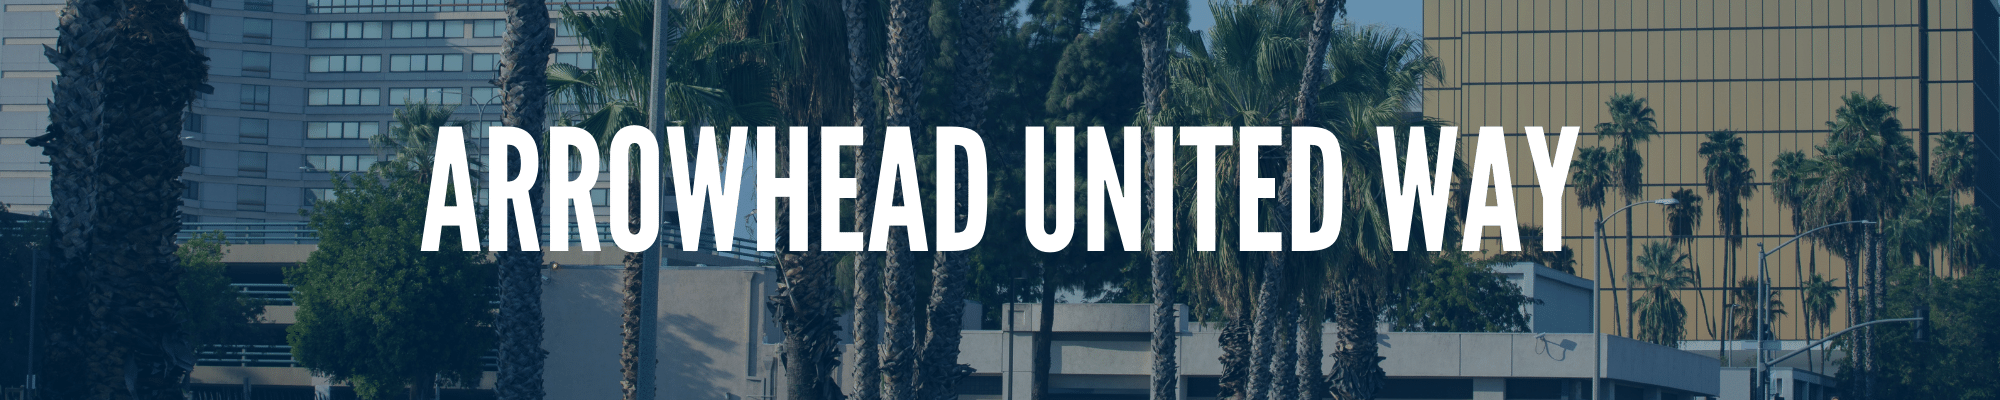 Arrowhead United Way Header Image 